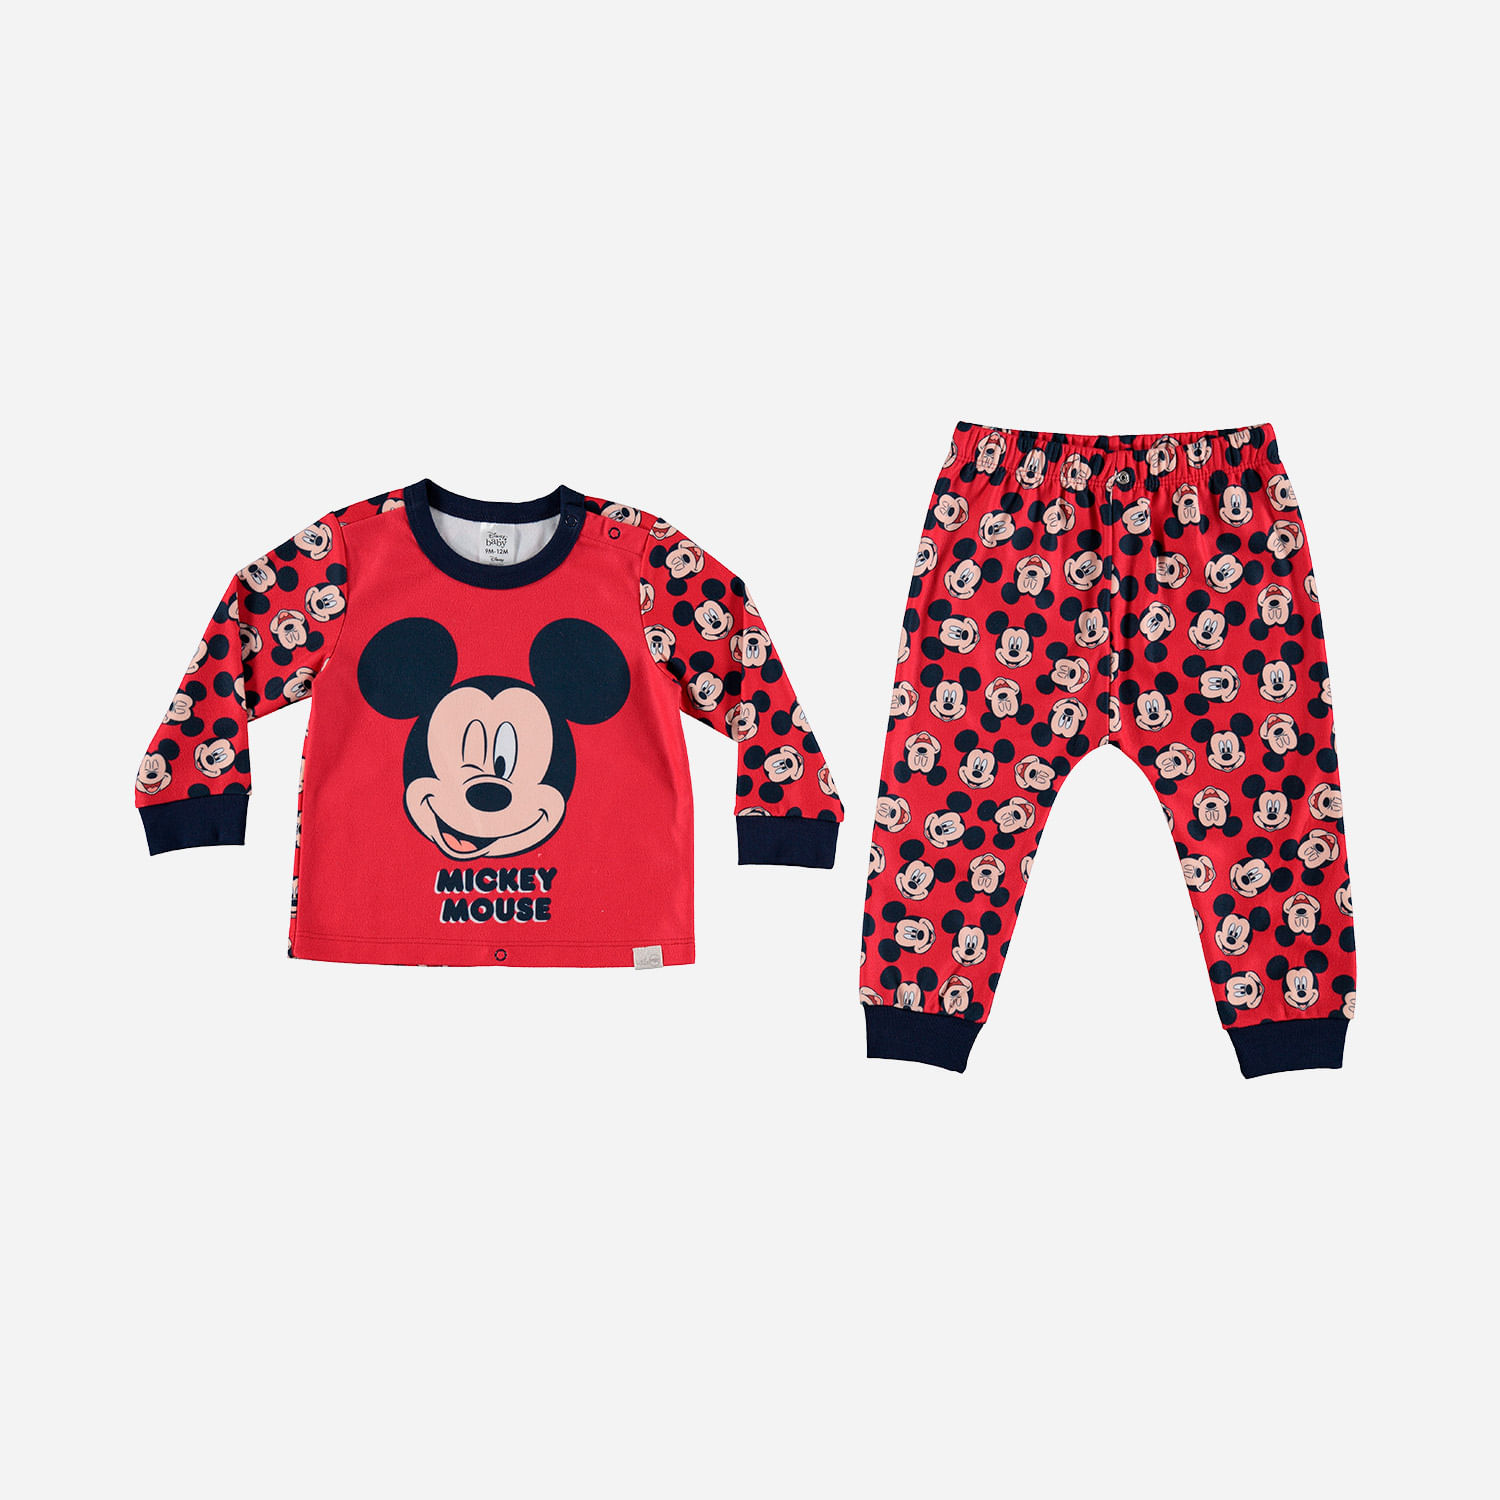 Recientemente limpiar Jadeo Pijama de Mickey Mouse para bebé niño manga larga y pantalón largo de  LittleMIC